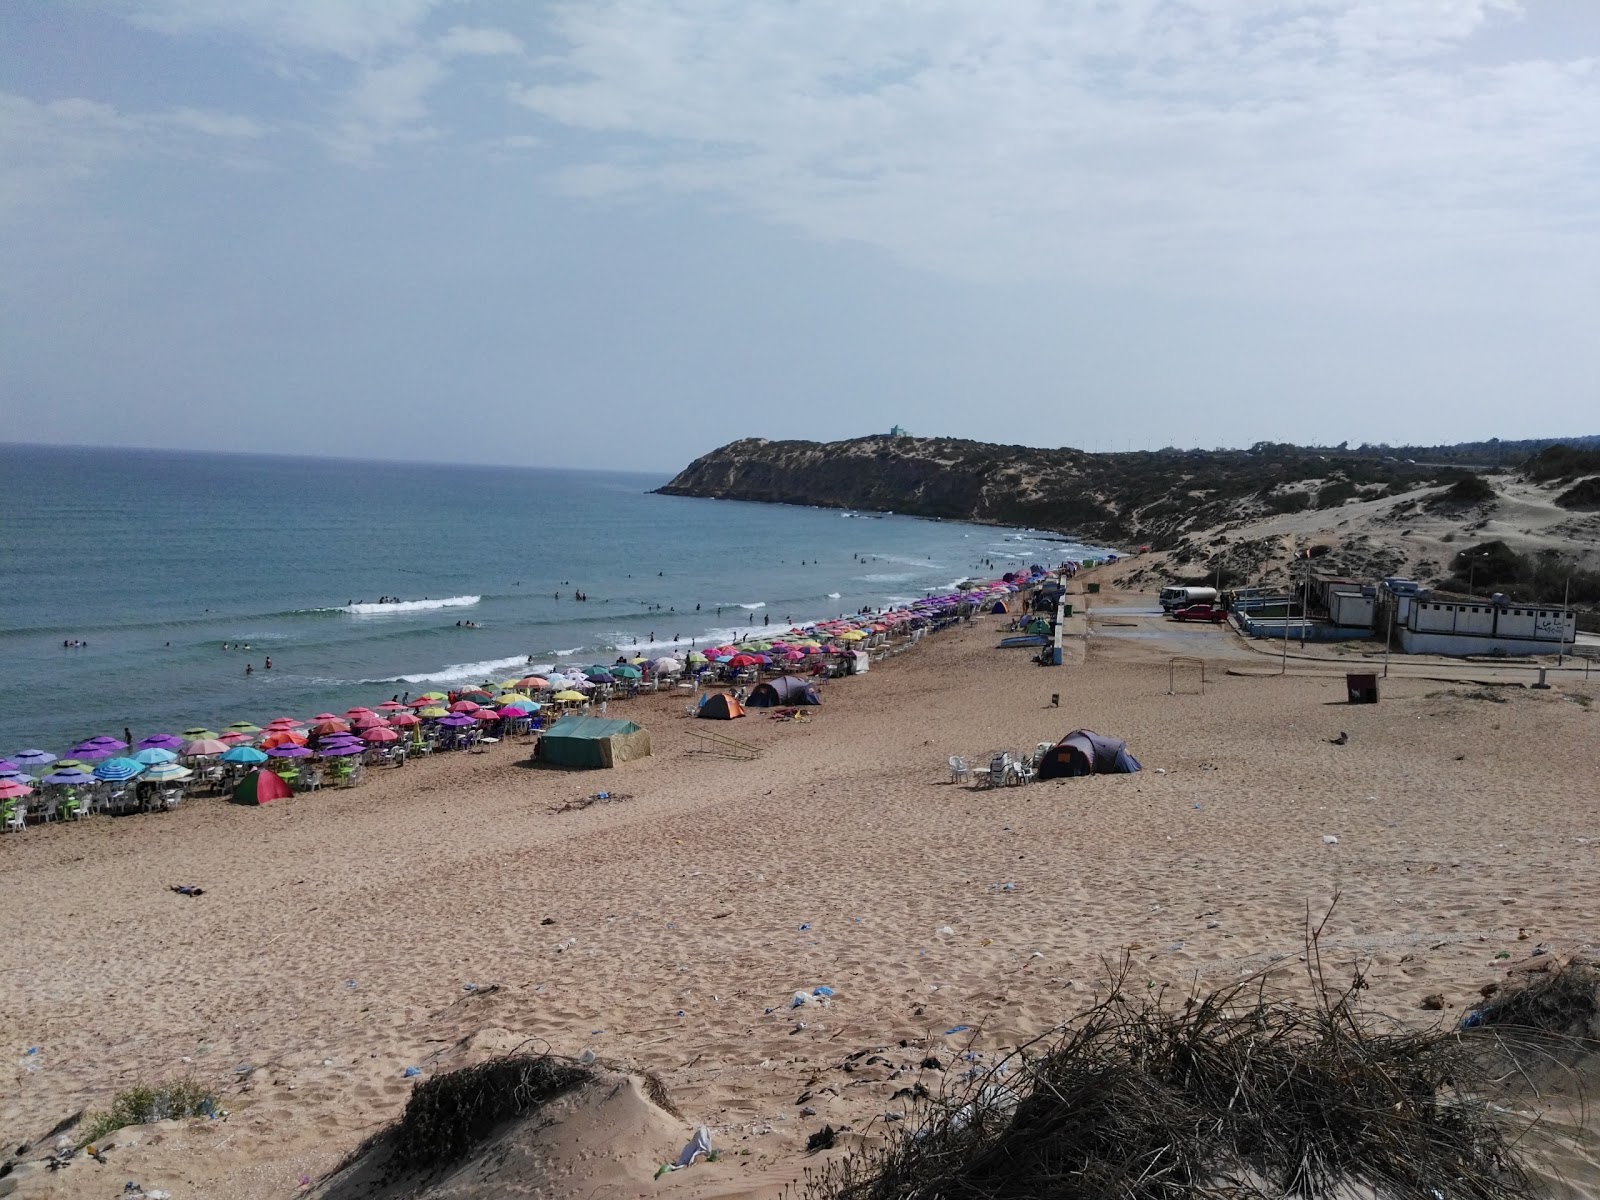 Fotografie cu Sidi Mansour beach cu nivelul de curățenie in medie